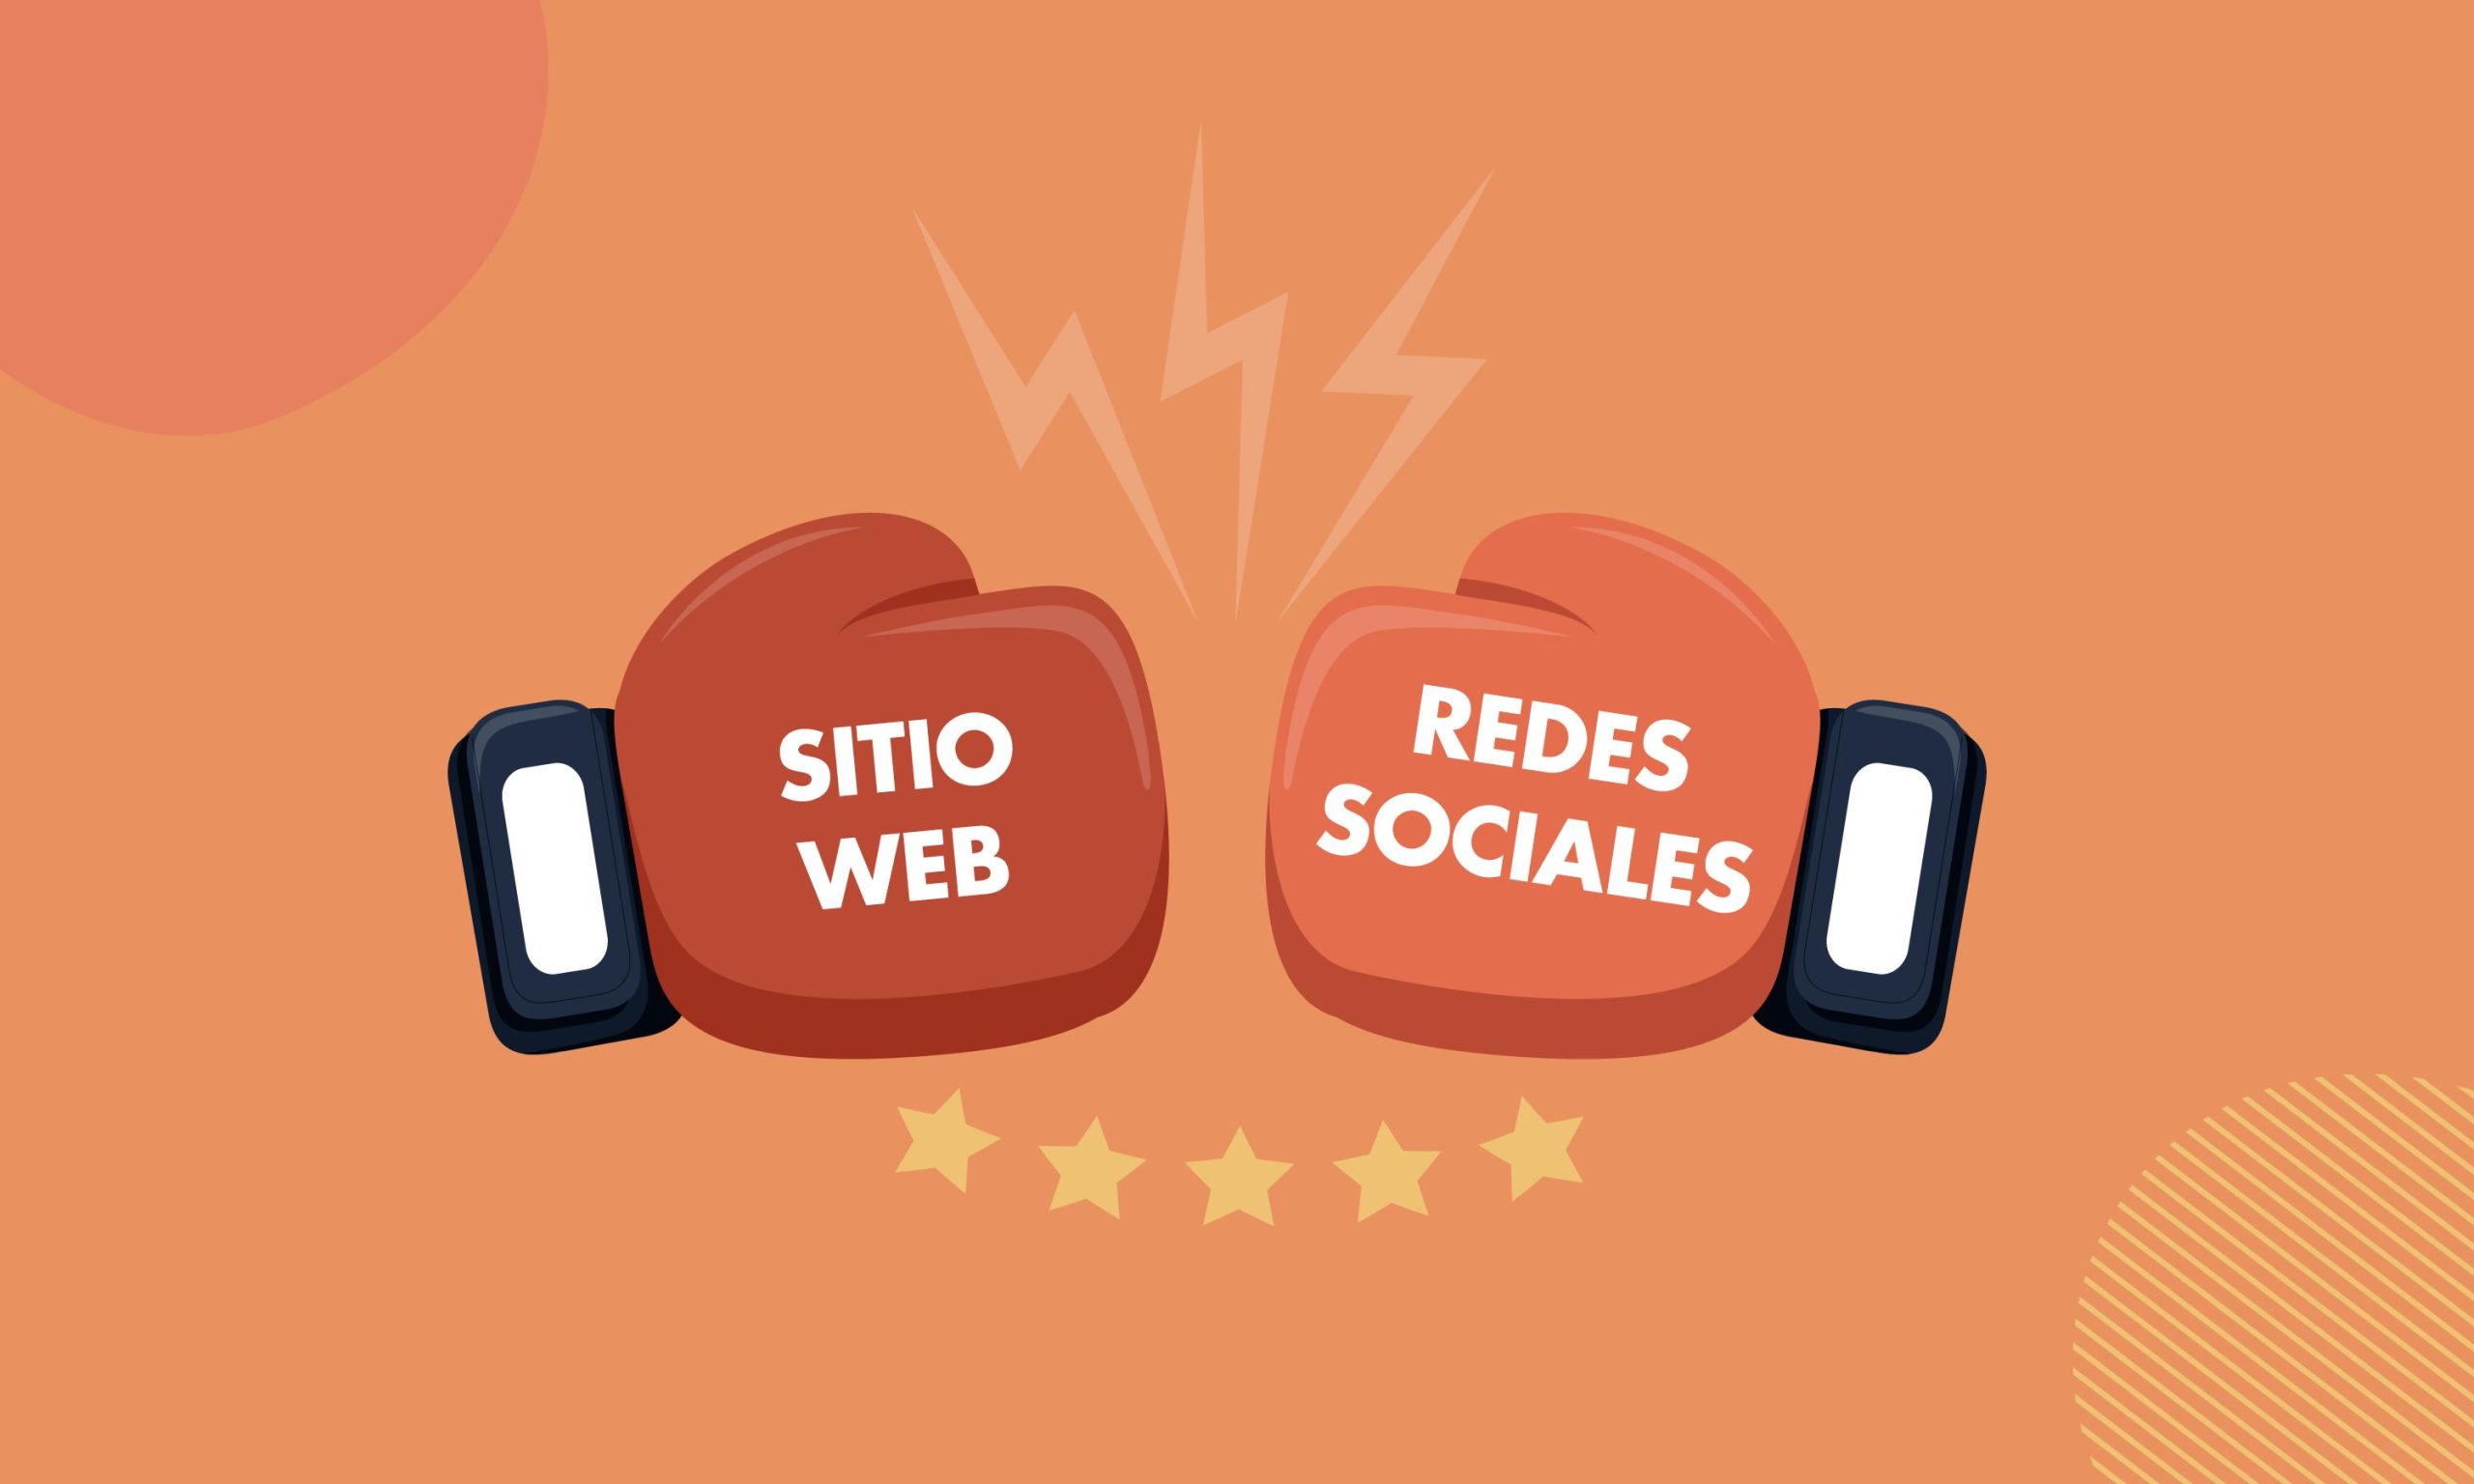 redes-sociales-vs-pagina-web-large-rFt4ScWsST